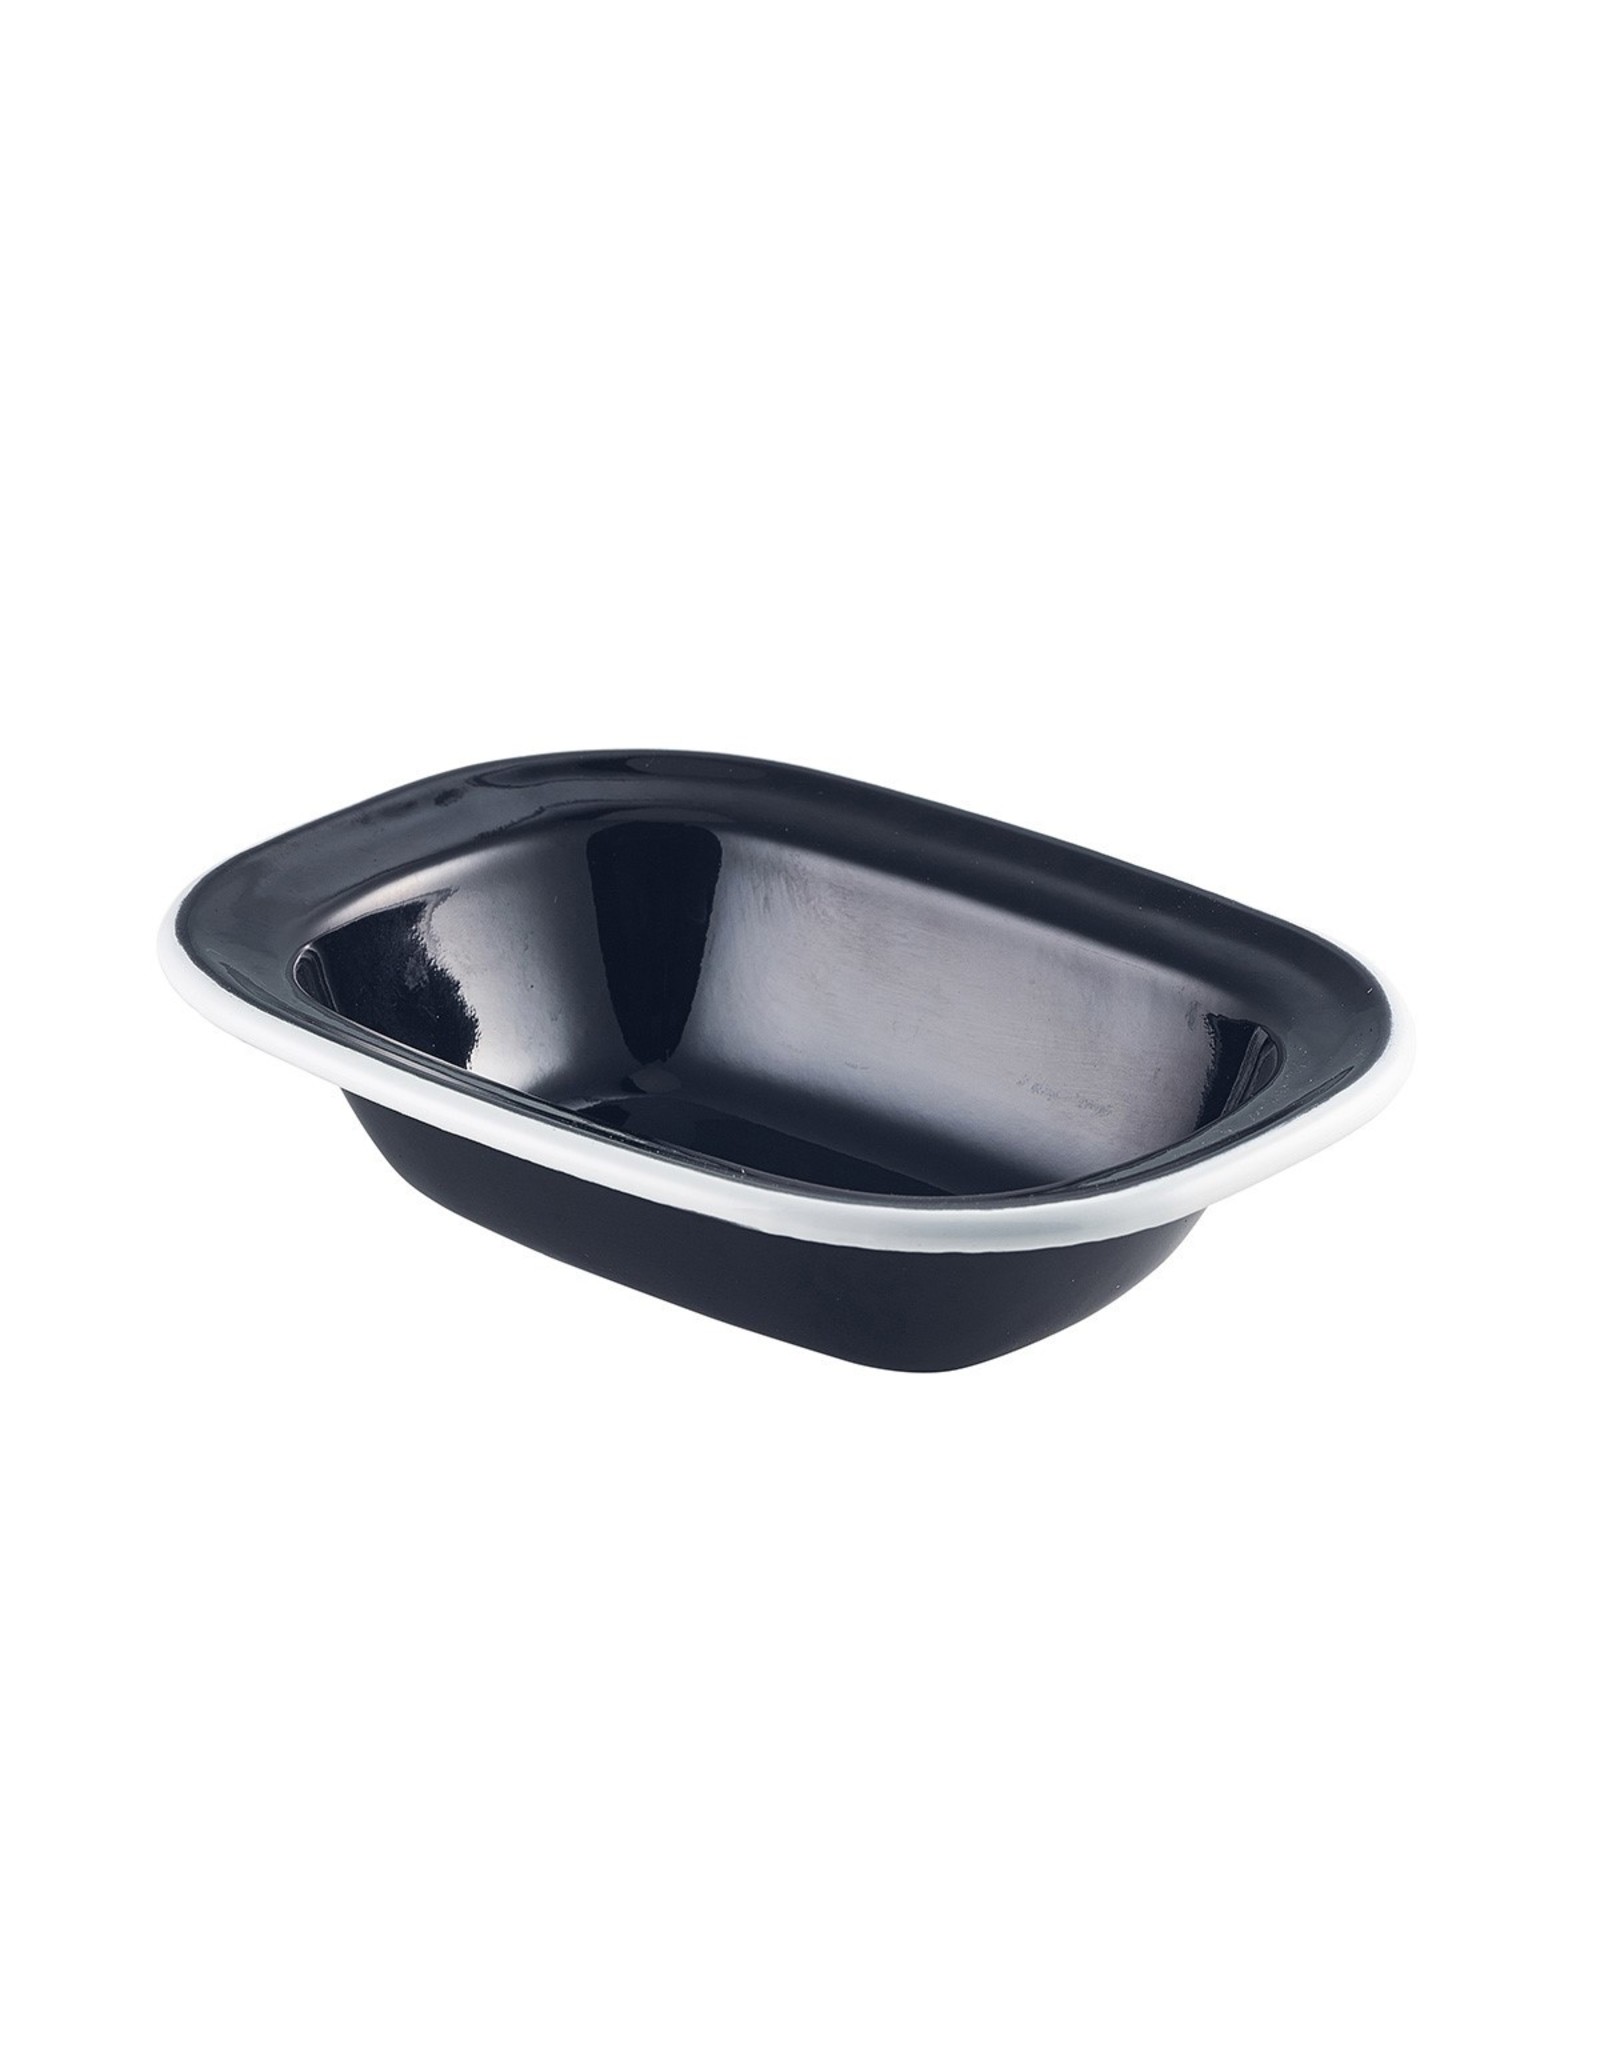 Stylepoint Enamel oven dish black/white 16 x 12 cm